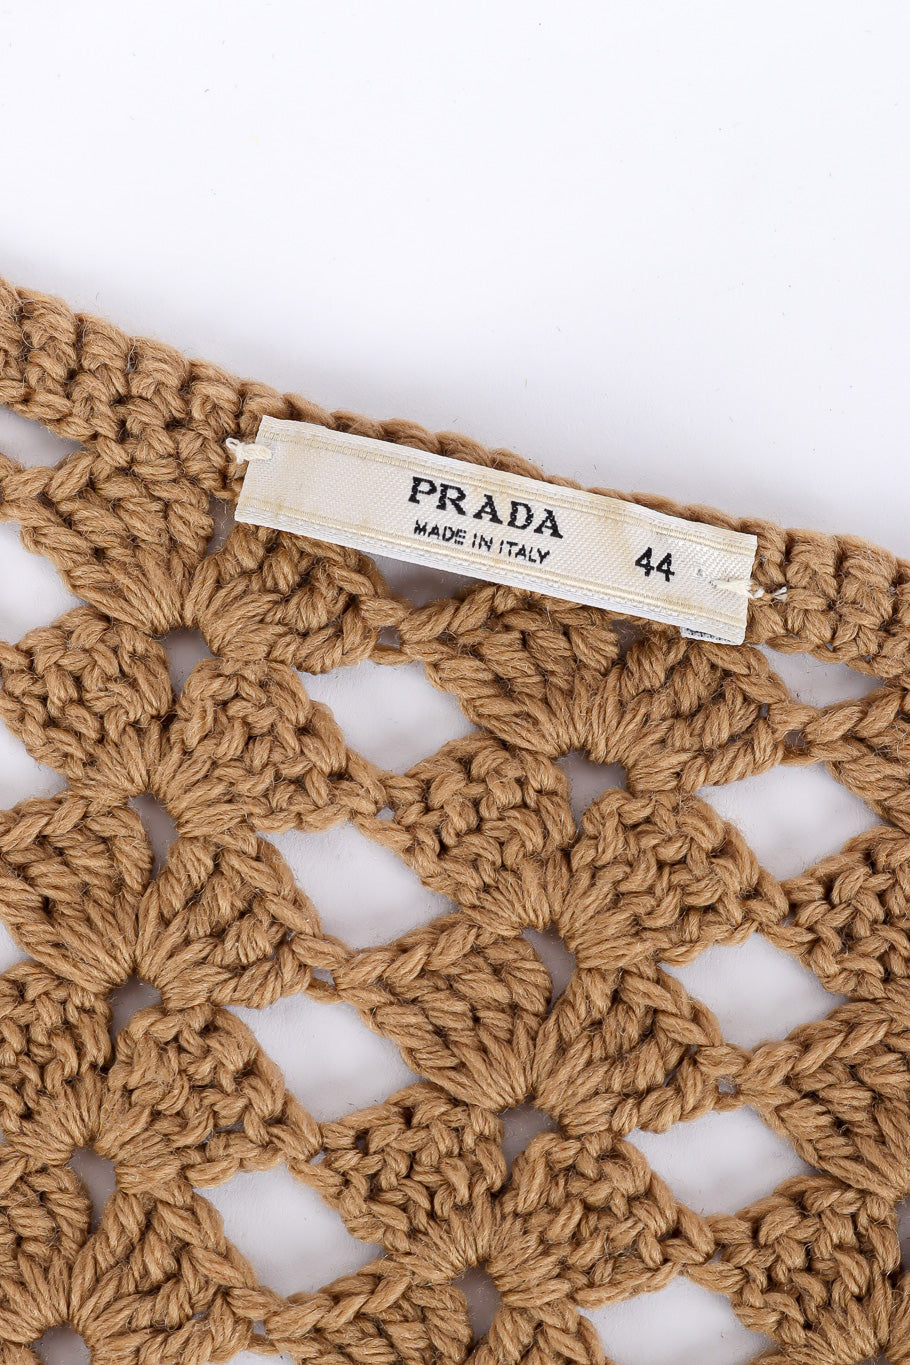 Metallic crochet knitted cocktail dress by Prada photo of label. @recessla